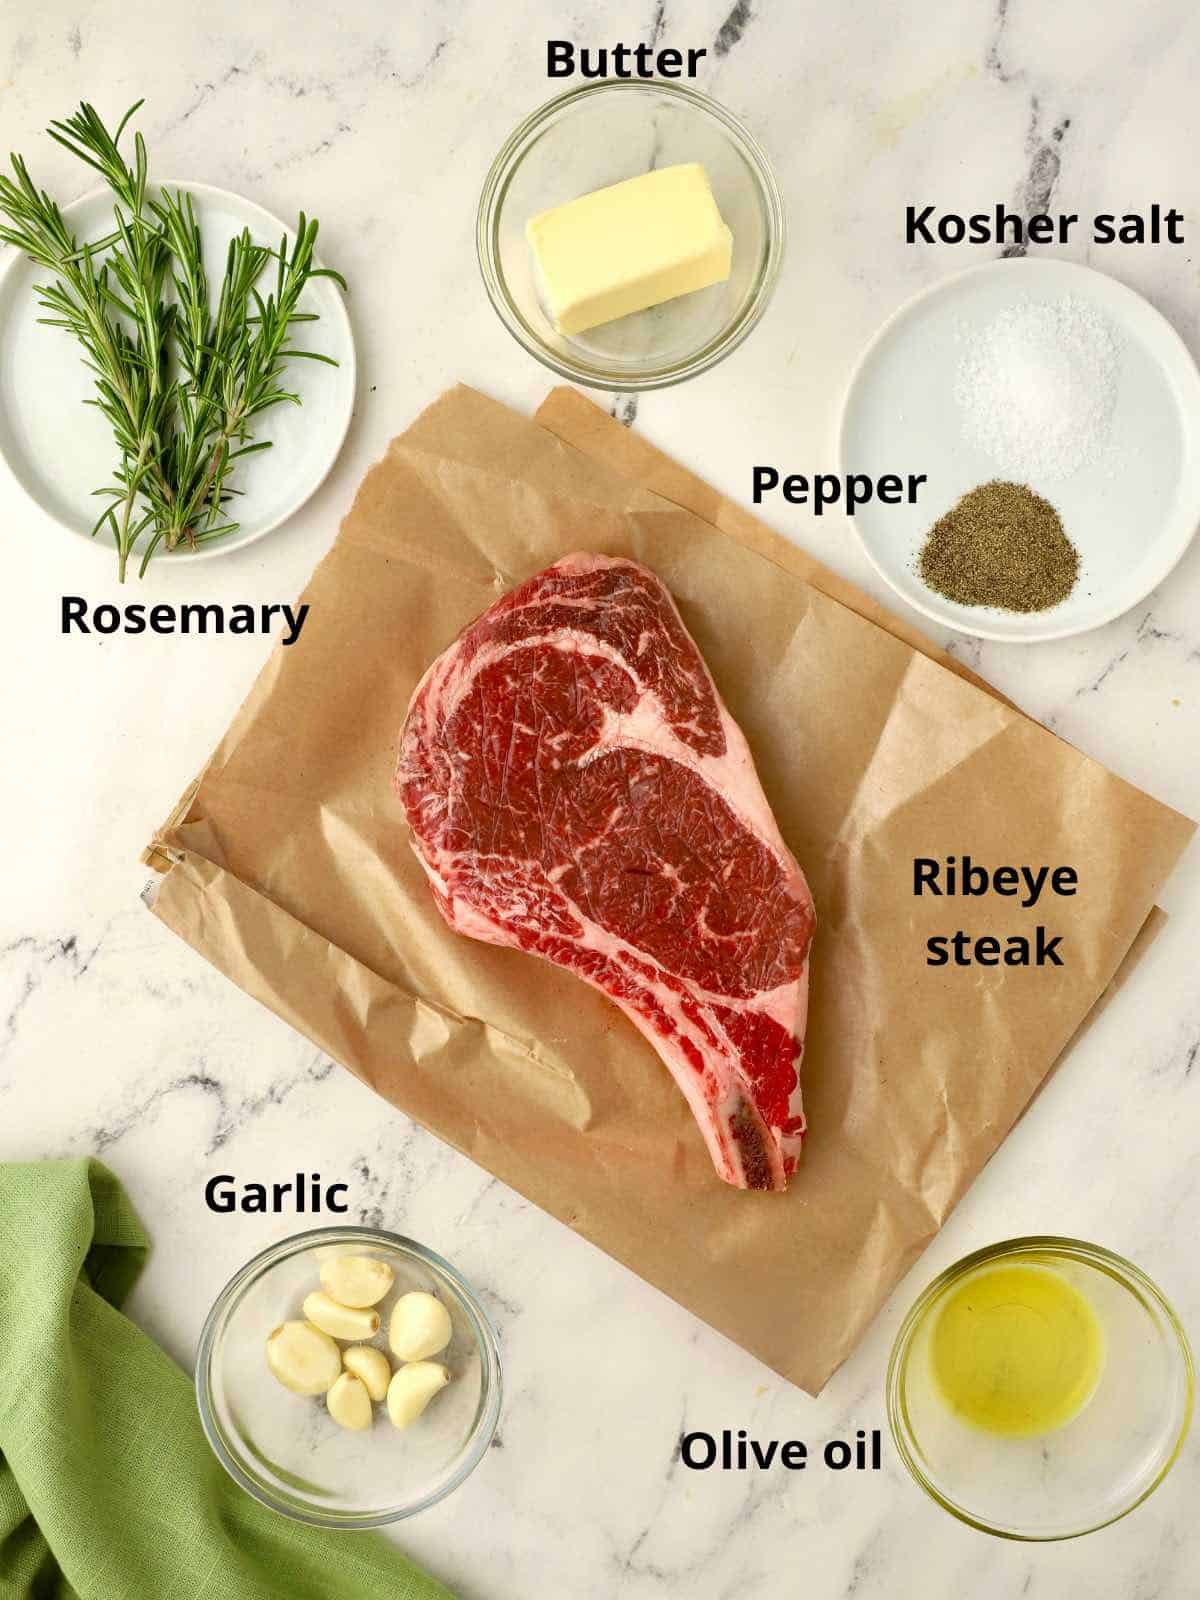 A raw steak, garlic, rosemary and other seasonings. 